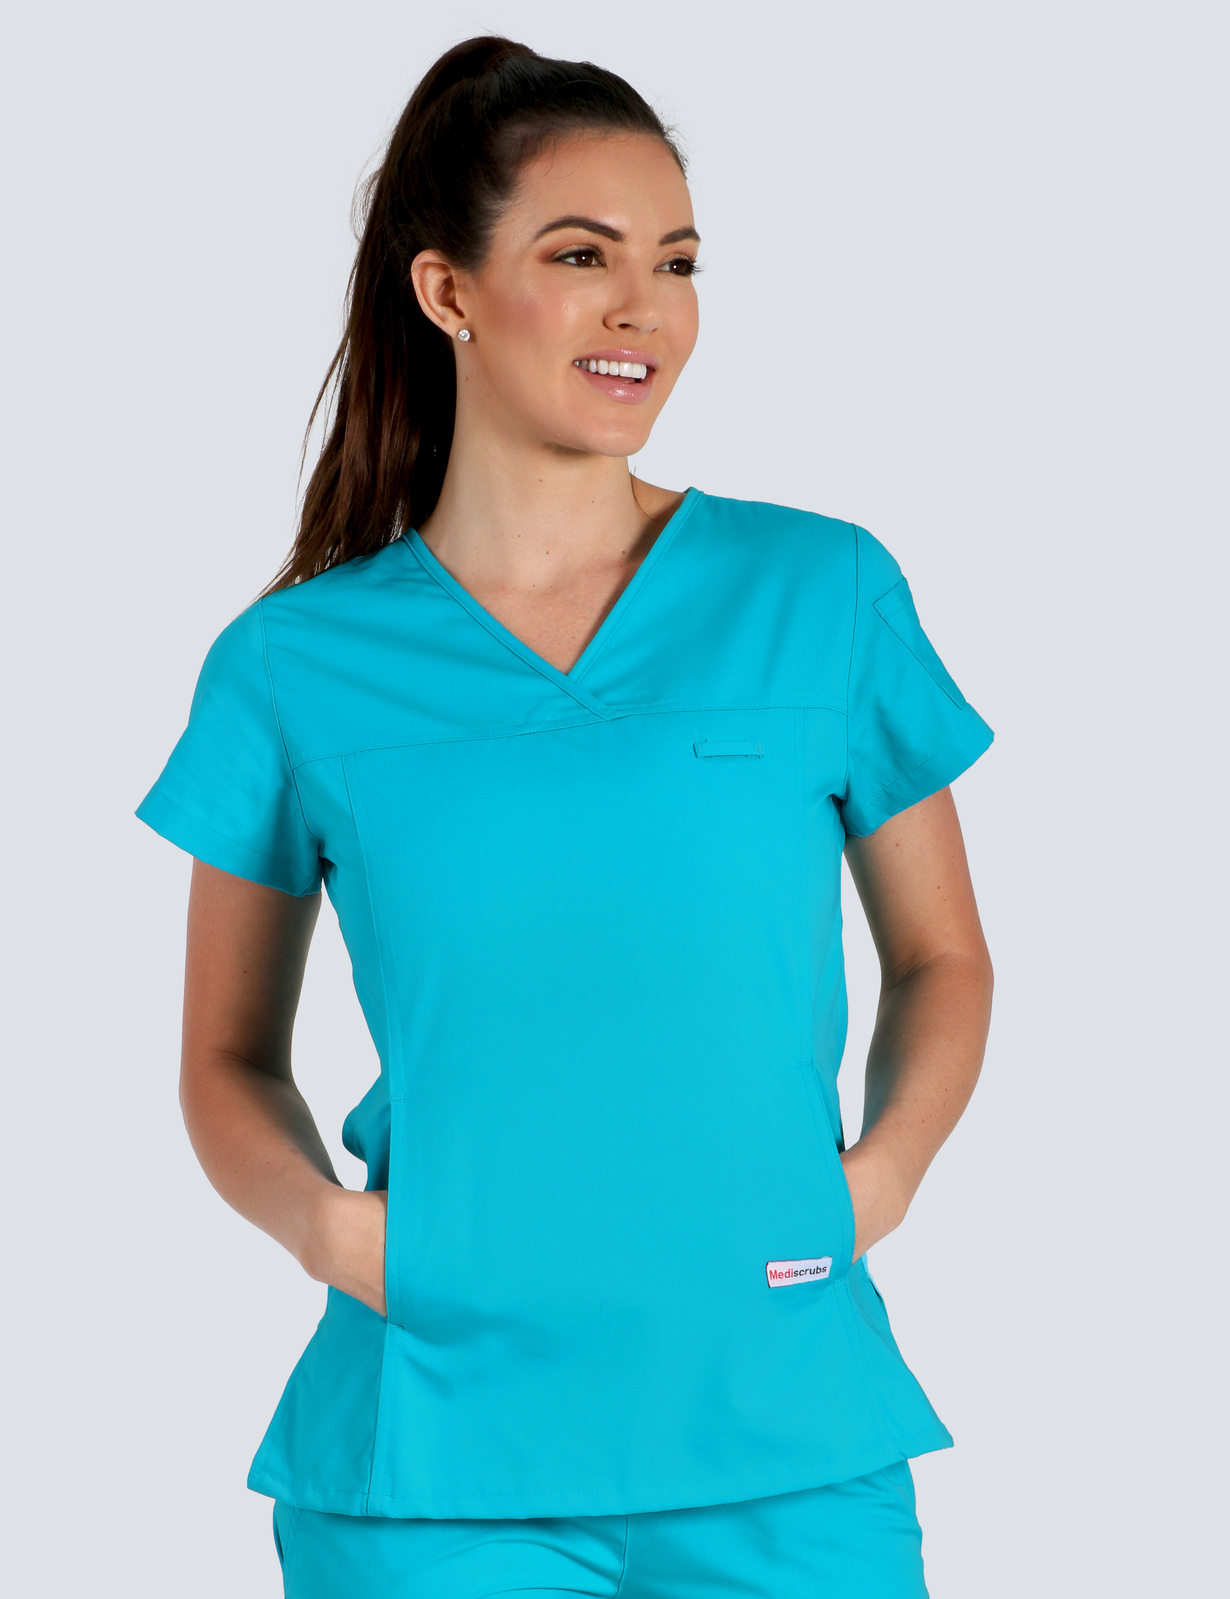 Queensland Children's Hospital Emergency Department Clinical Nurse  Uniform Top Bundle  (Women's Fit Top in Aqua  incl Logos)